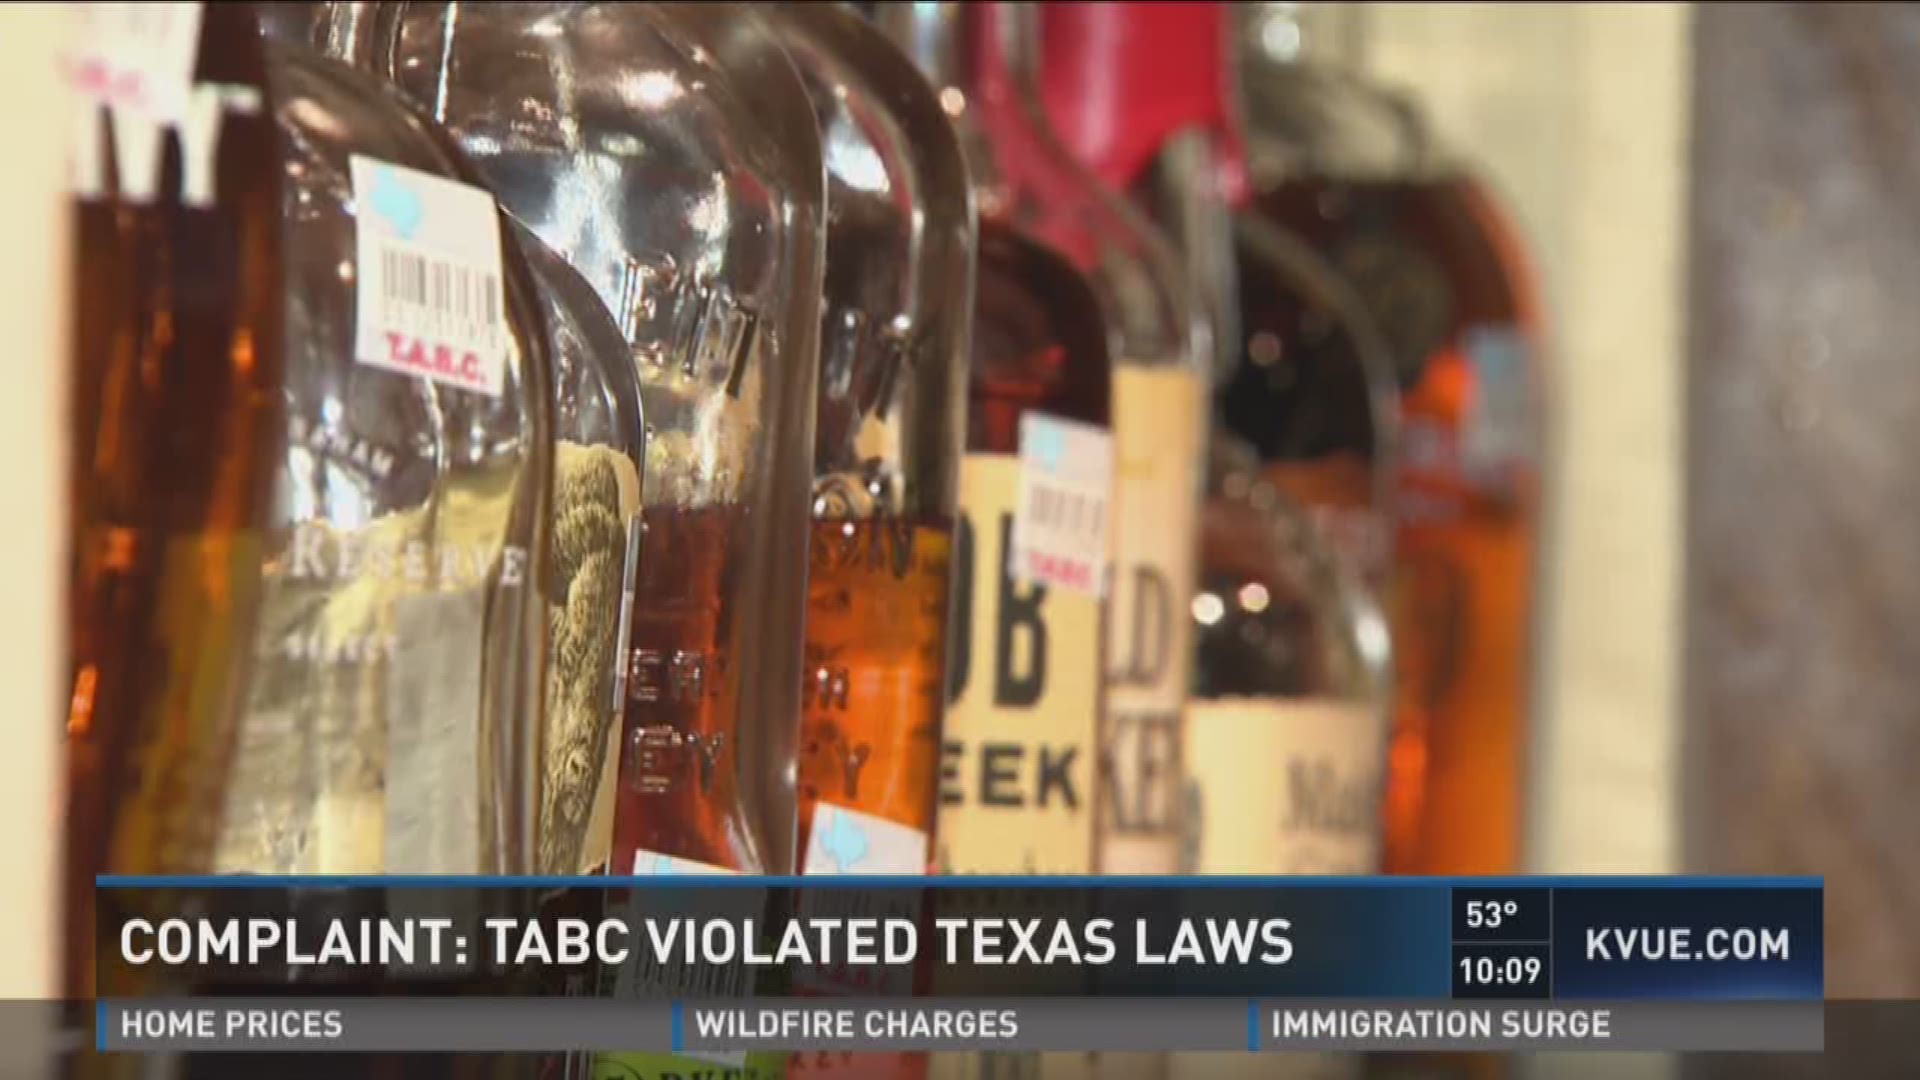 Complaint: TABC violated Texas laws